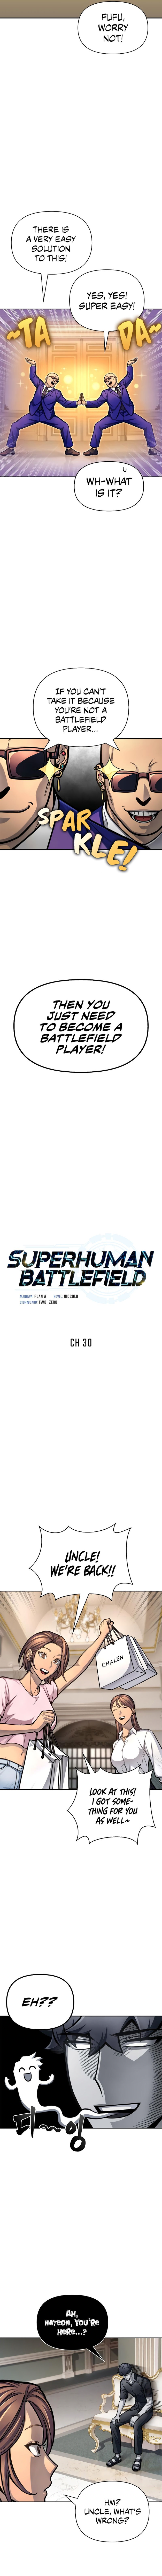 Superhuman Battlefield - Page 3